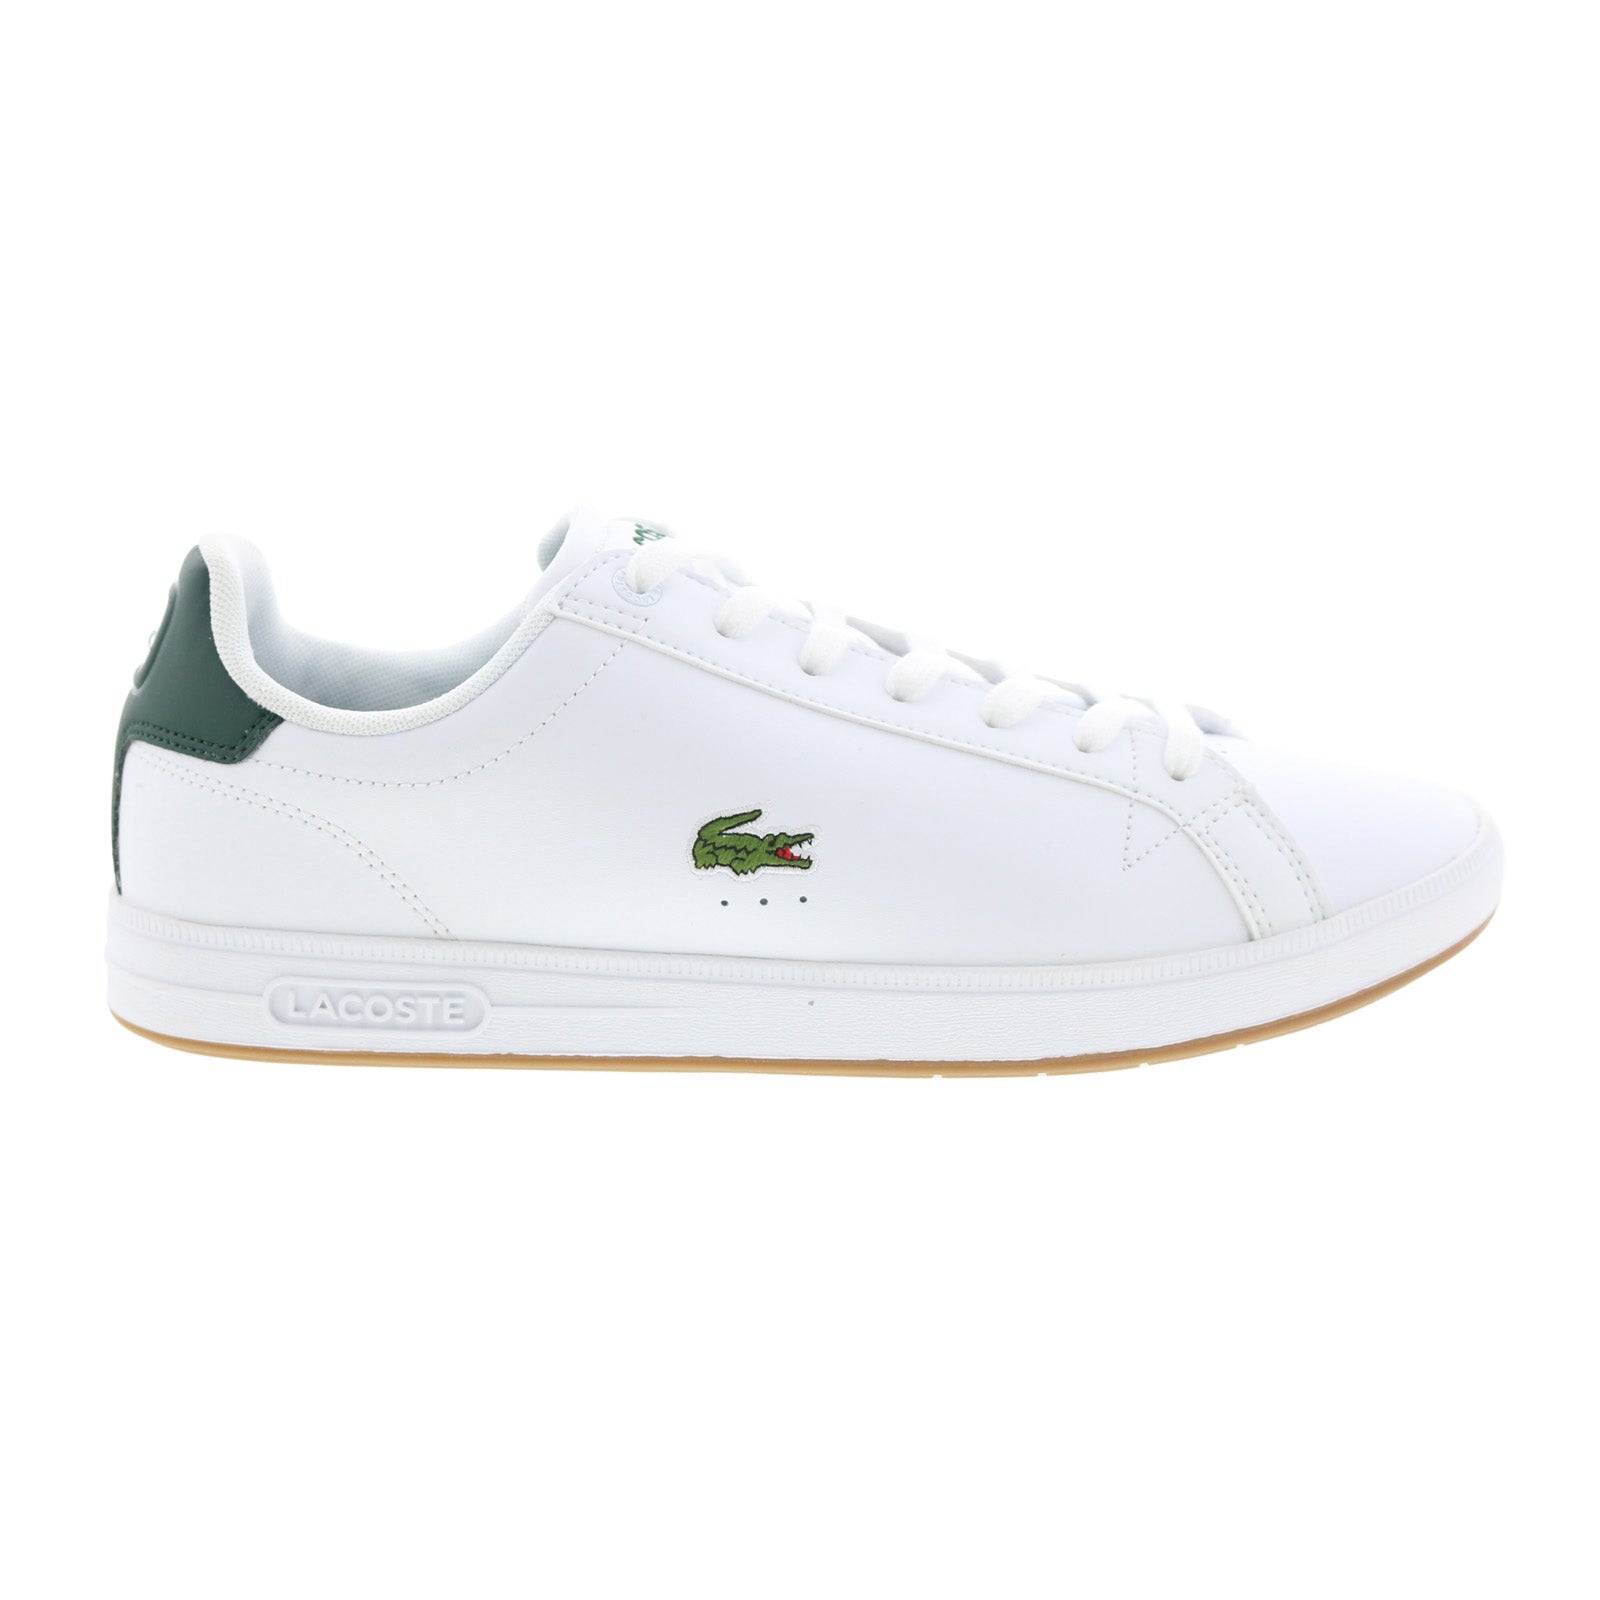 ondernemer Sentimenteel bedenken Lacoste Graduate Pro 222 1 Mens White Leather Lifestyle Sneakers Shoes -  Ruze Shoes